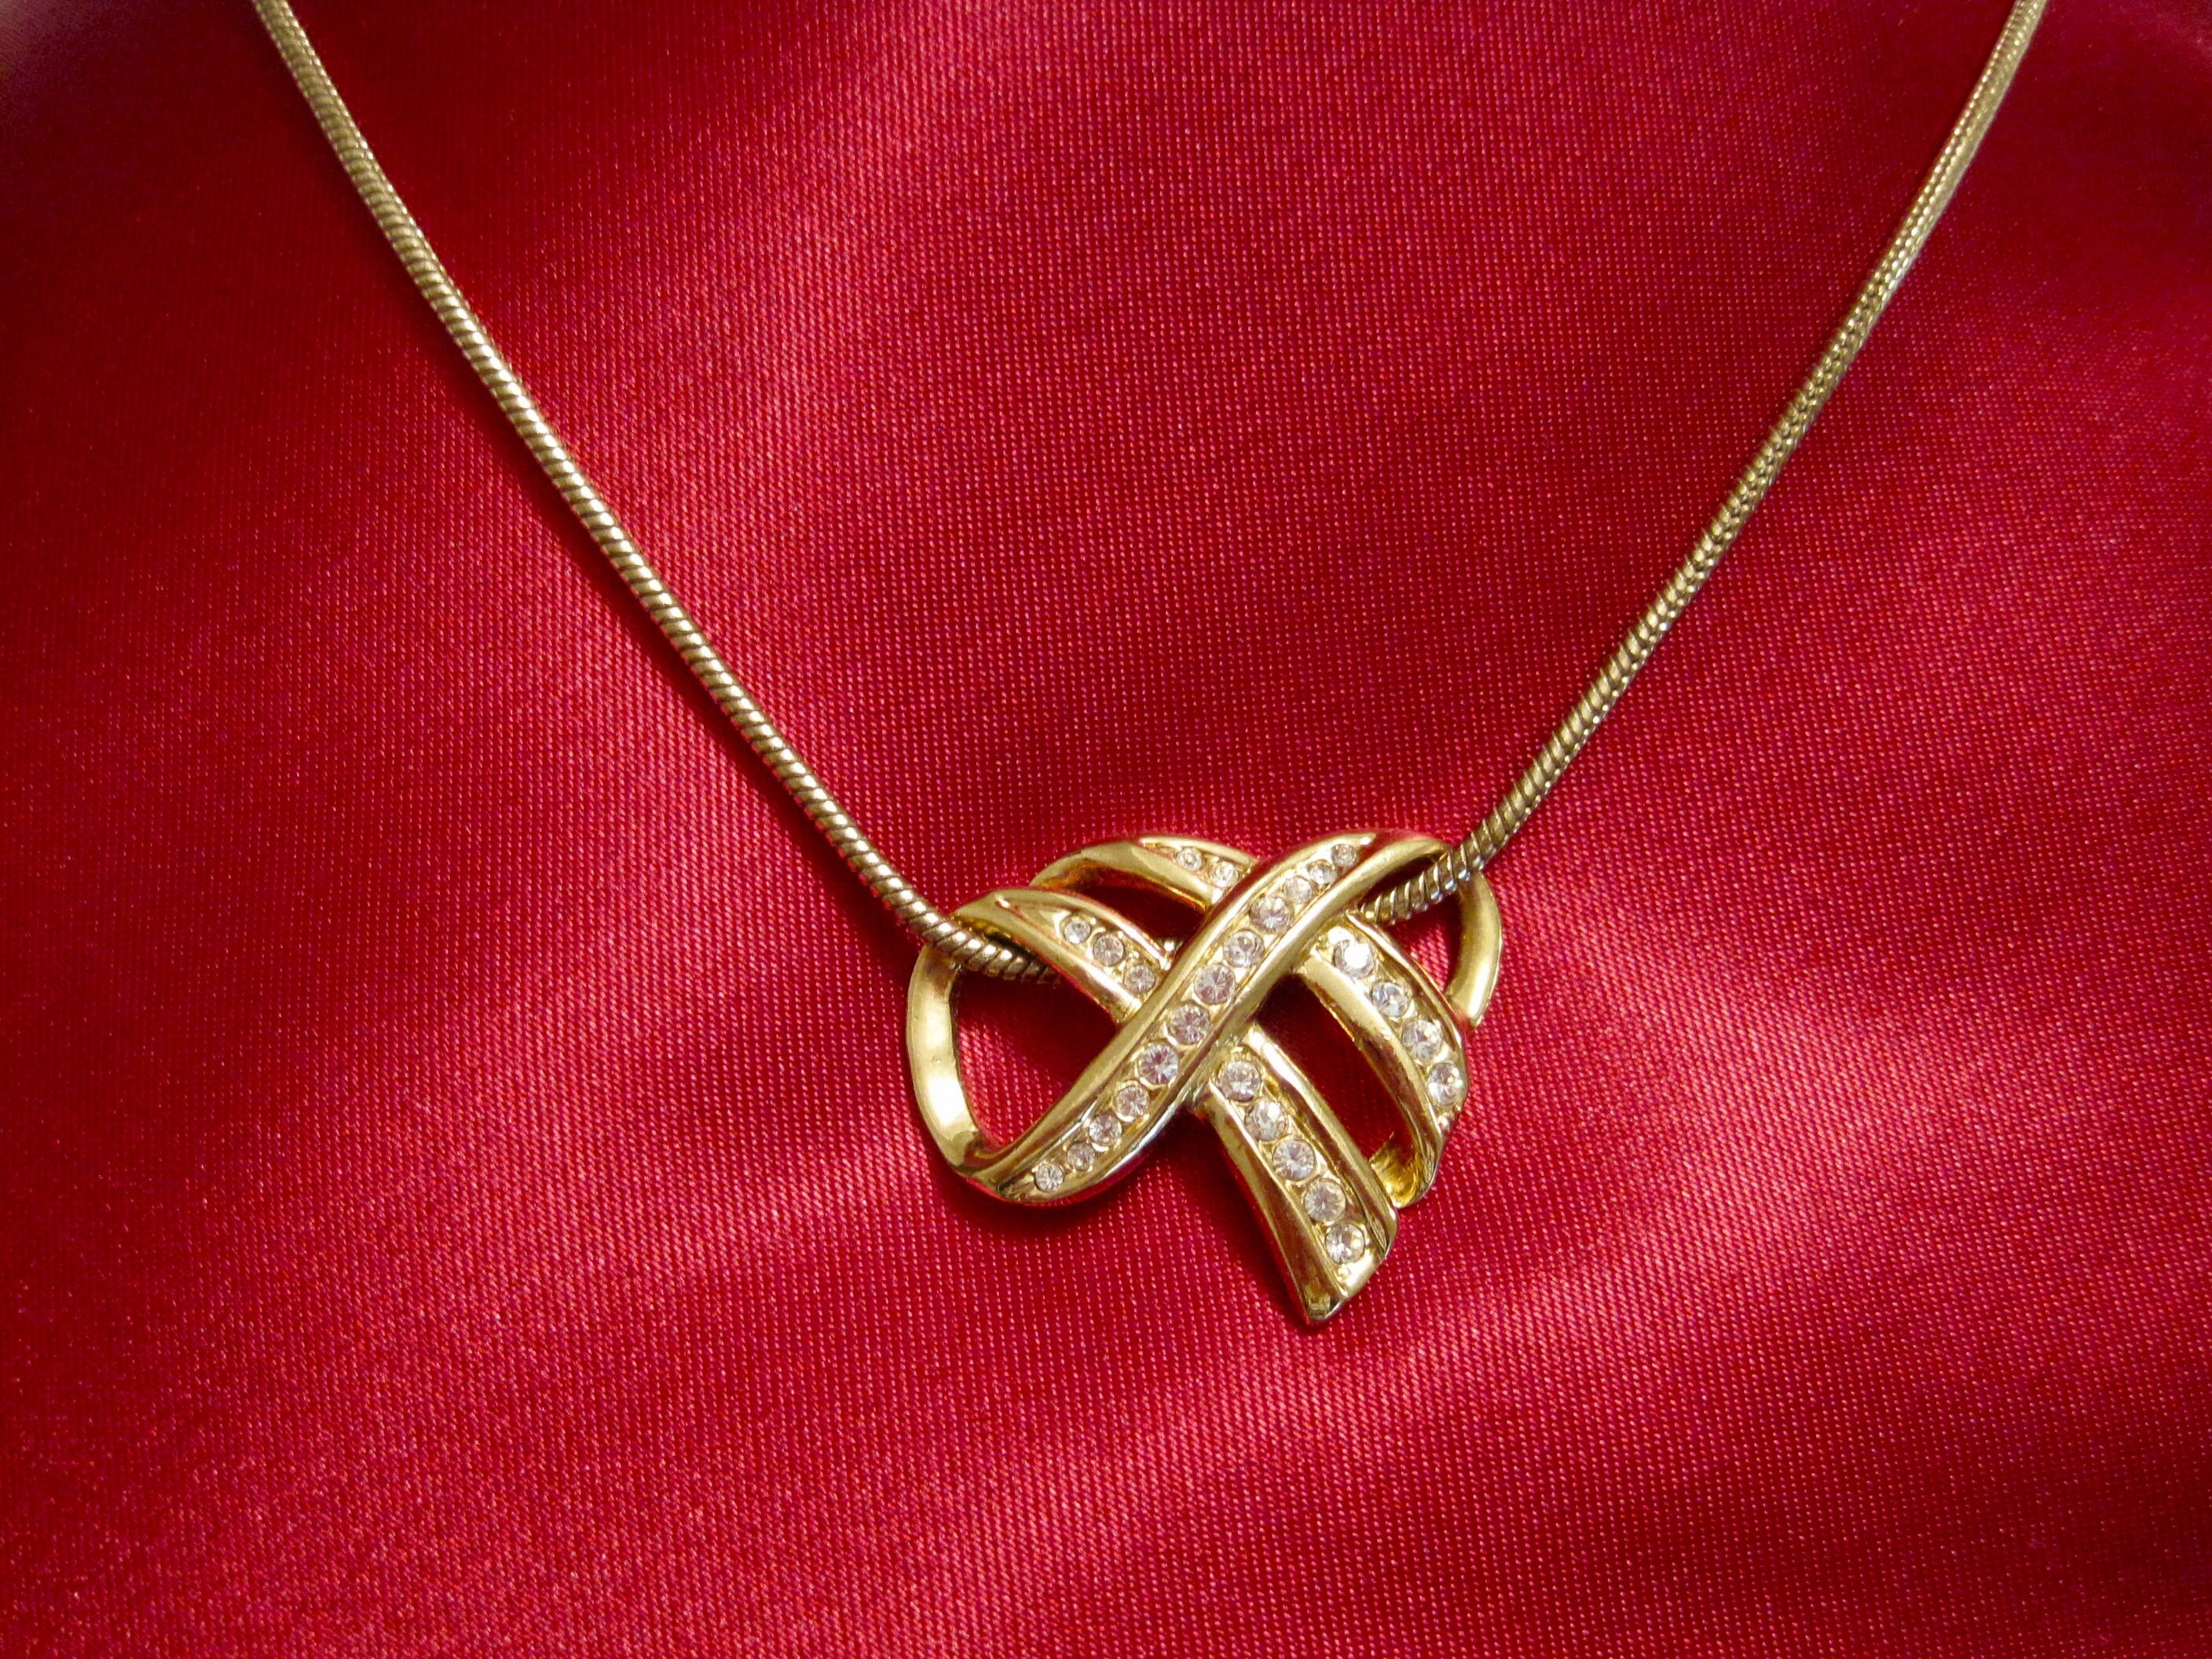 Diamond Ribbon Bow Pendant/Necklace 14k White Gold (0.23ct)